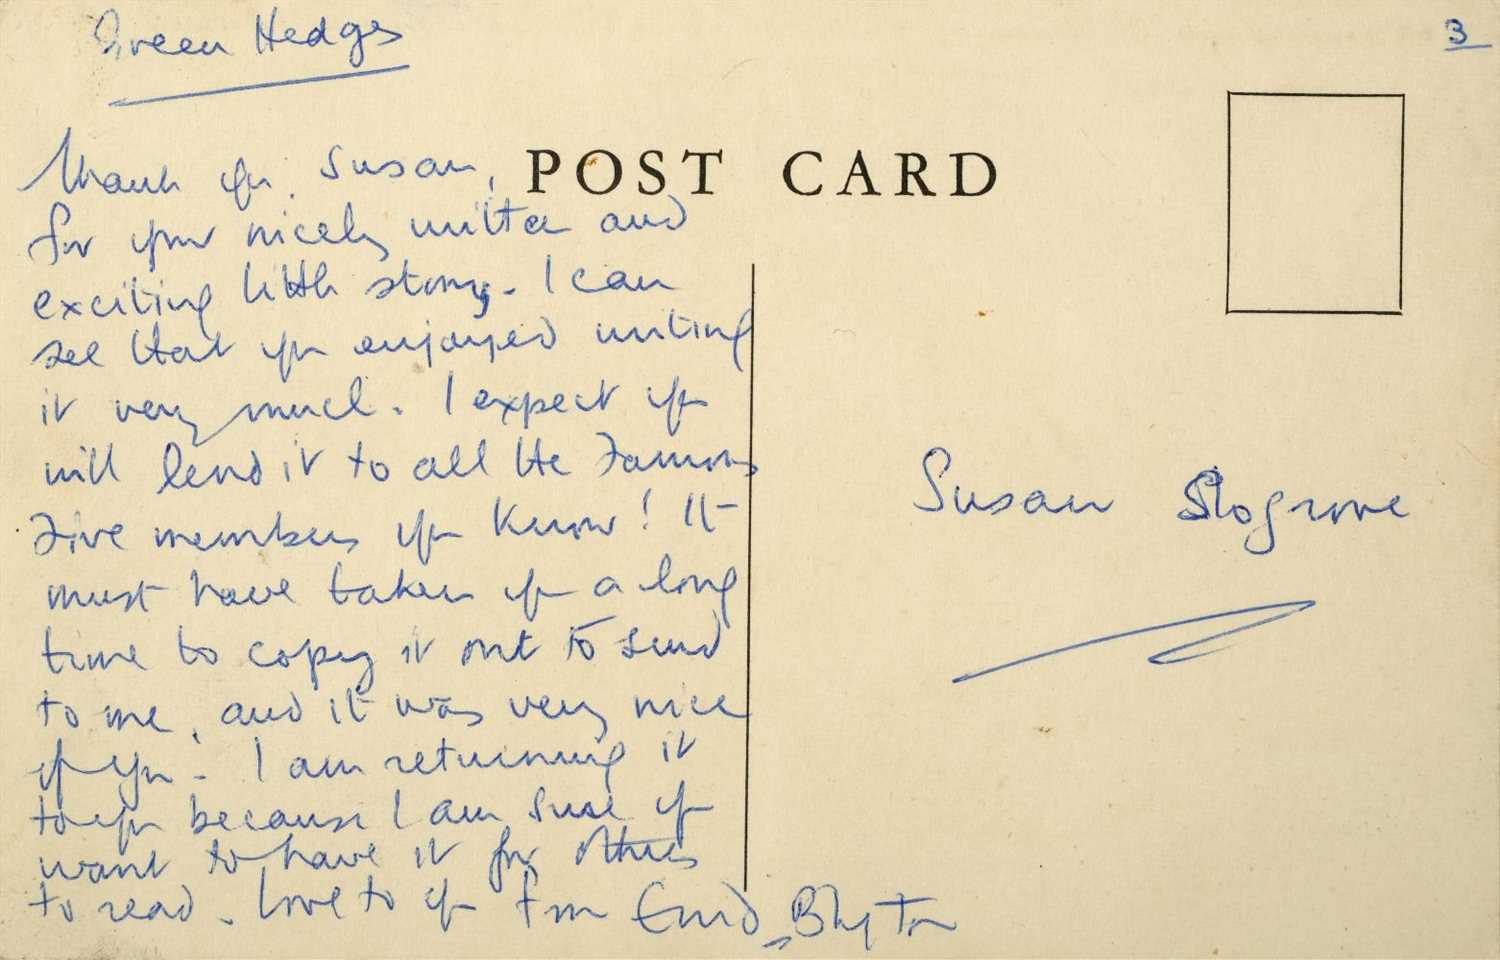 Lot 547 - Blyton (Enid, 1897-1968). Autograph Letter, Signed, Undated